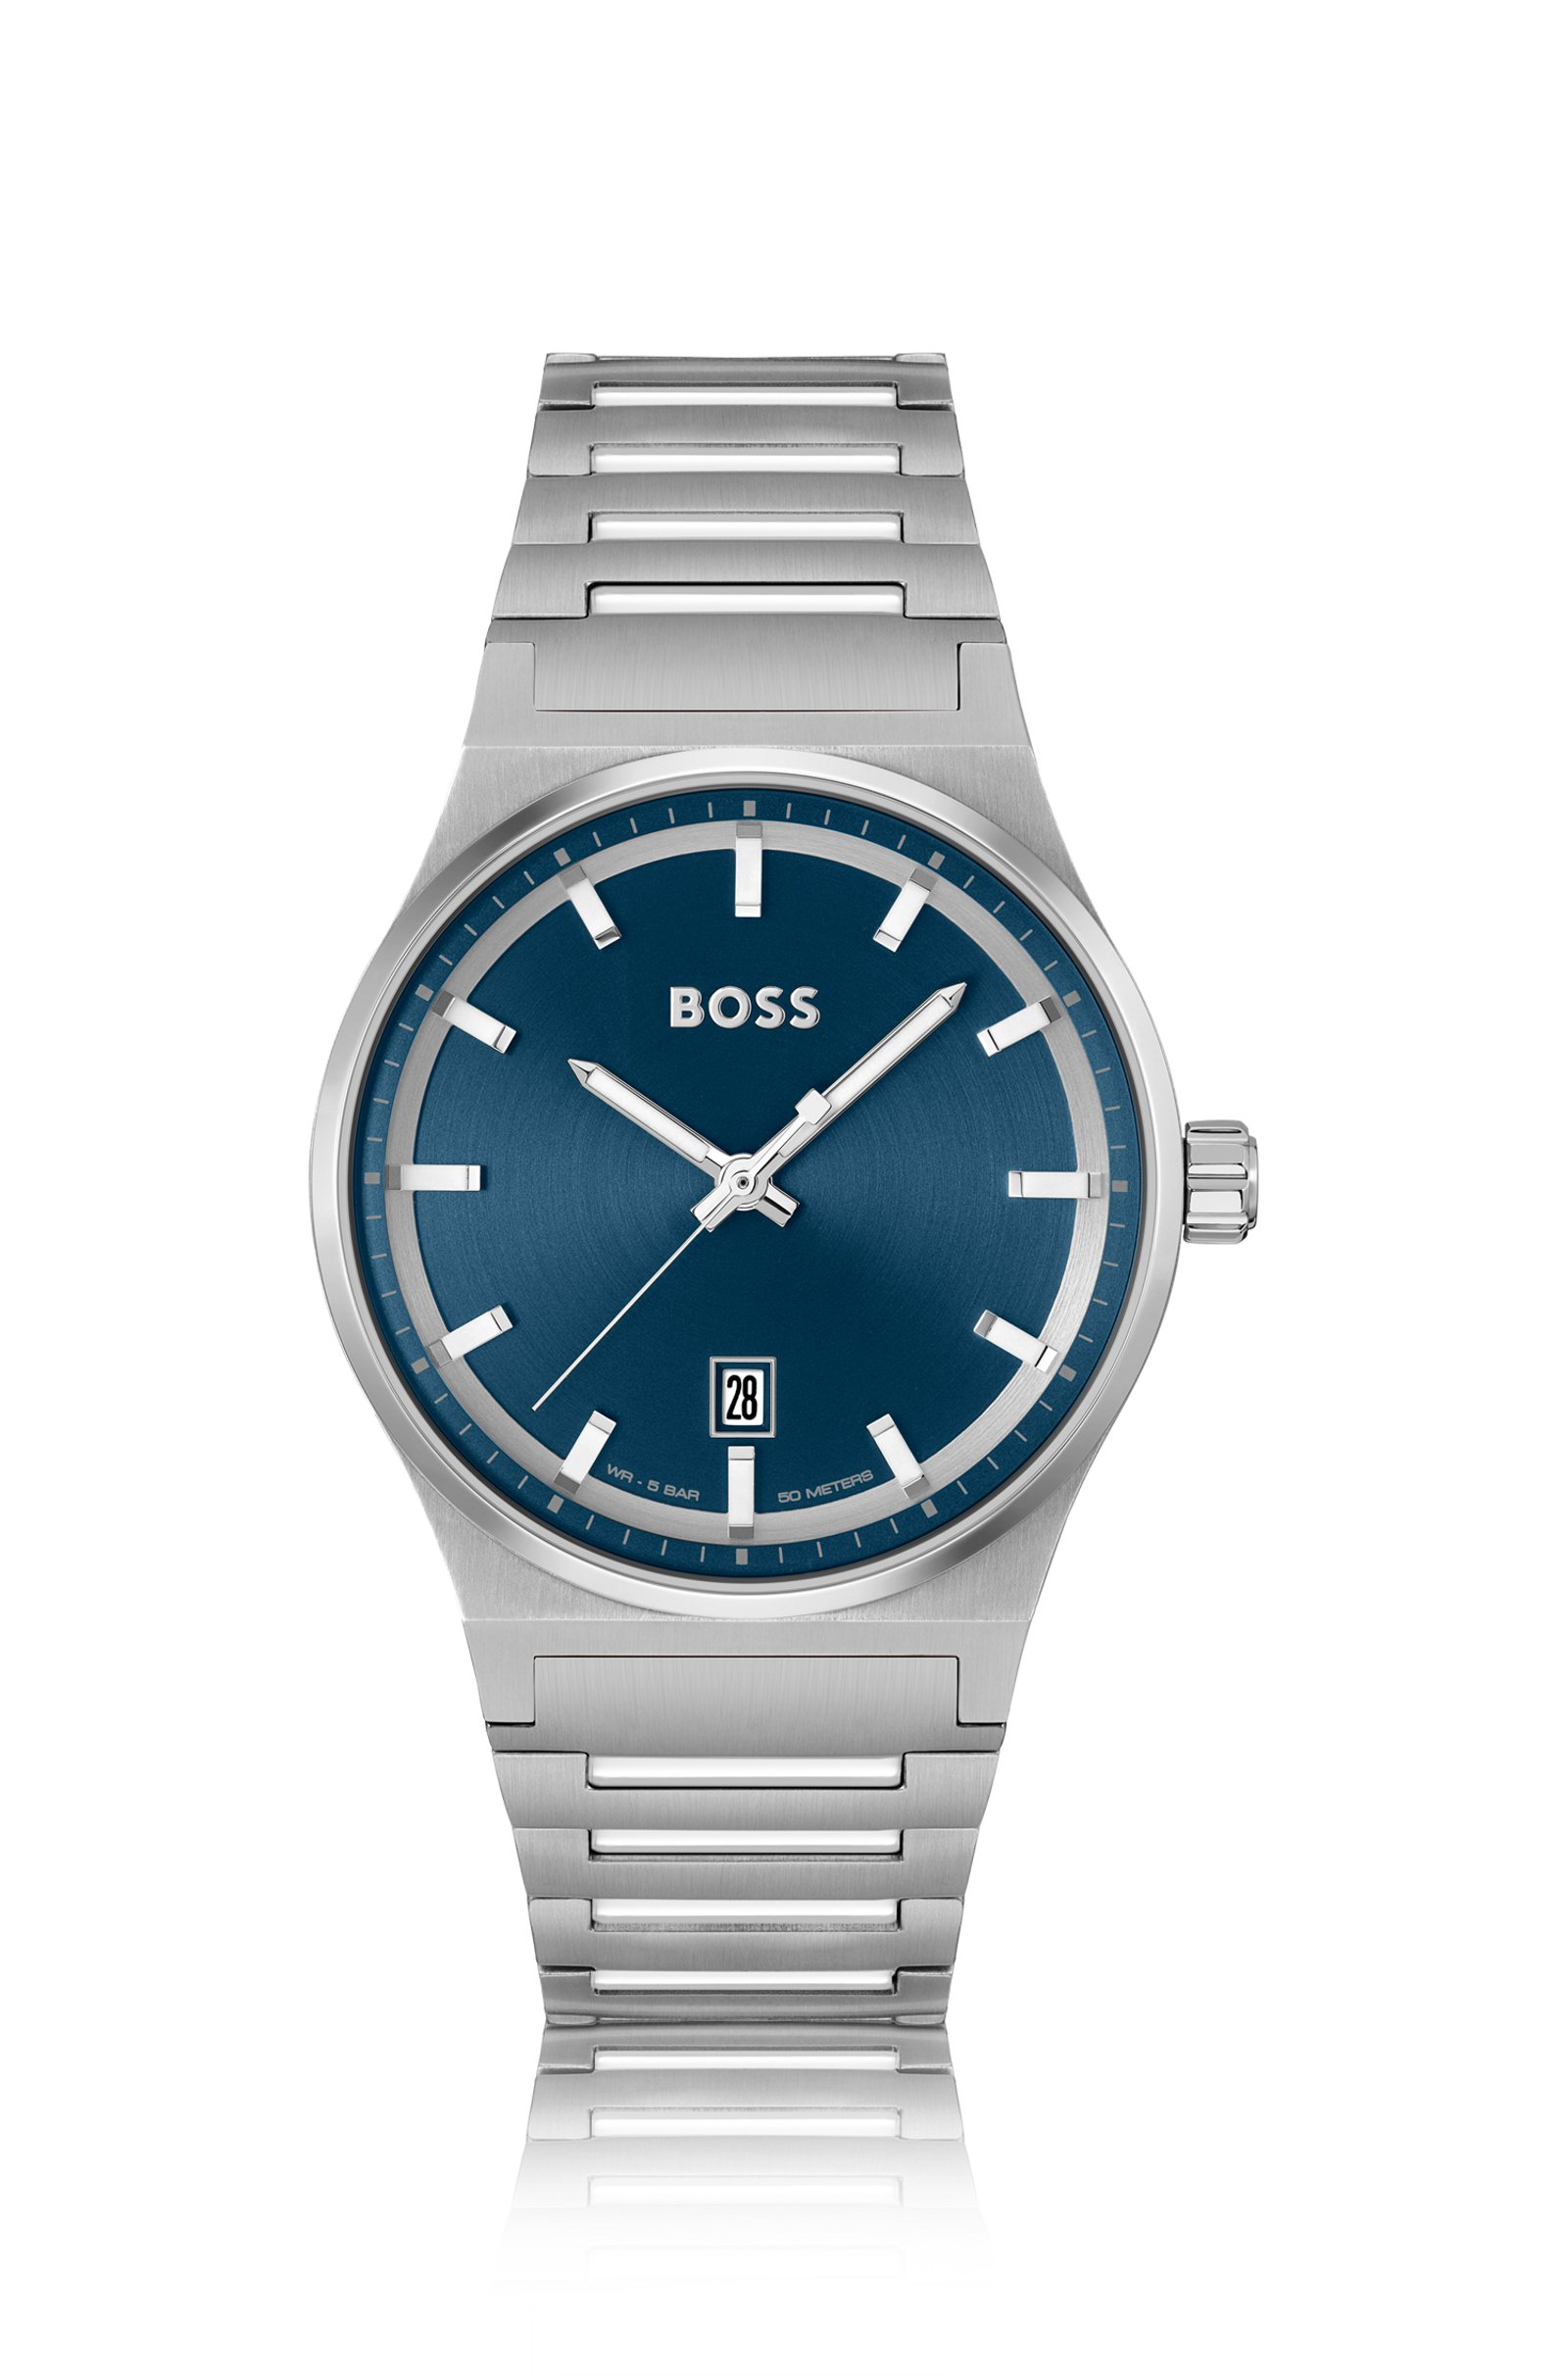 The Hugo Boss Blue Dial Watch